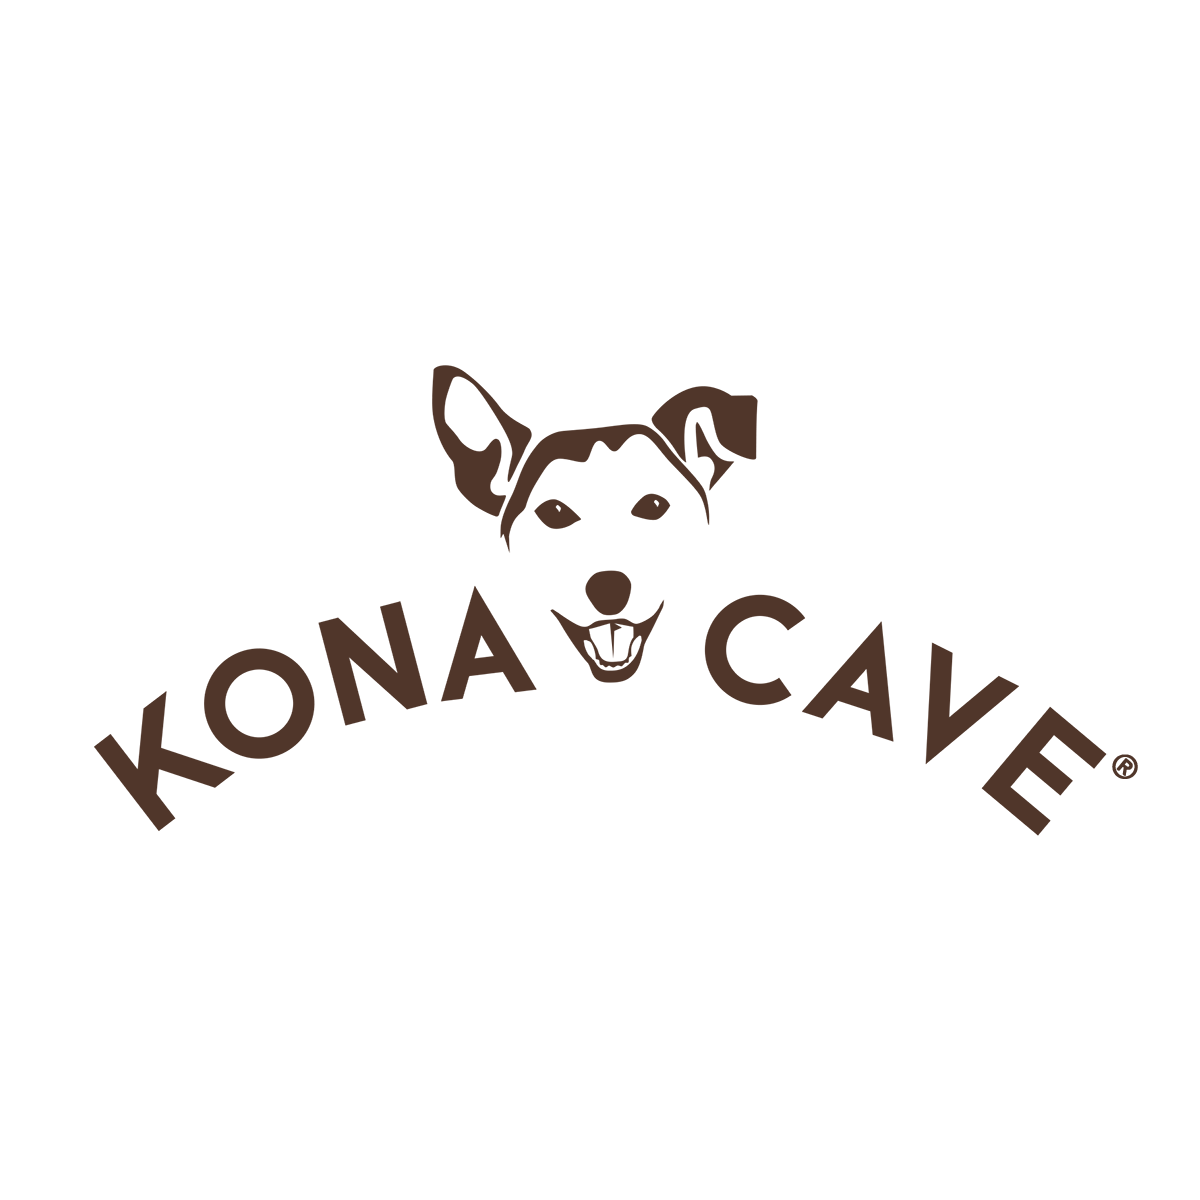 KONA CAVE® luxury dog brand. KONA CAVE® luxury lifestyle pet brand.  Great dog logo. Outline of Jack Russell face of Kona the dog 